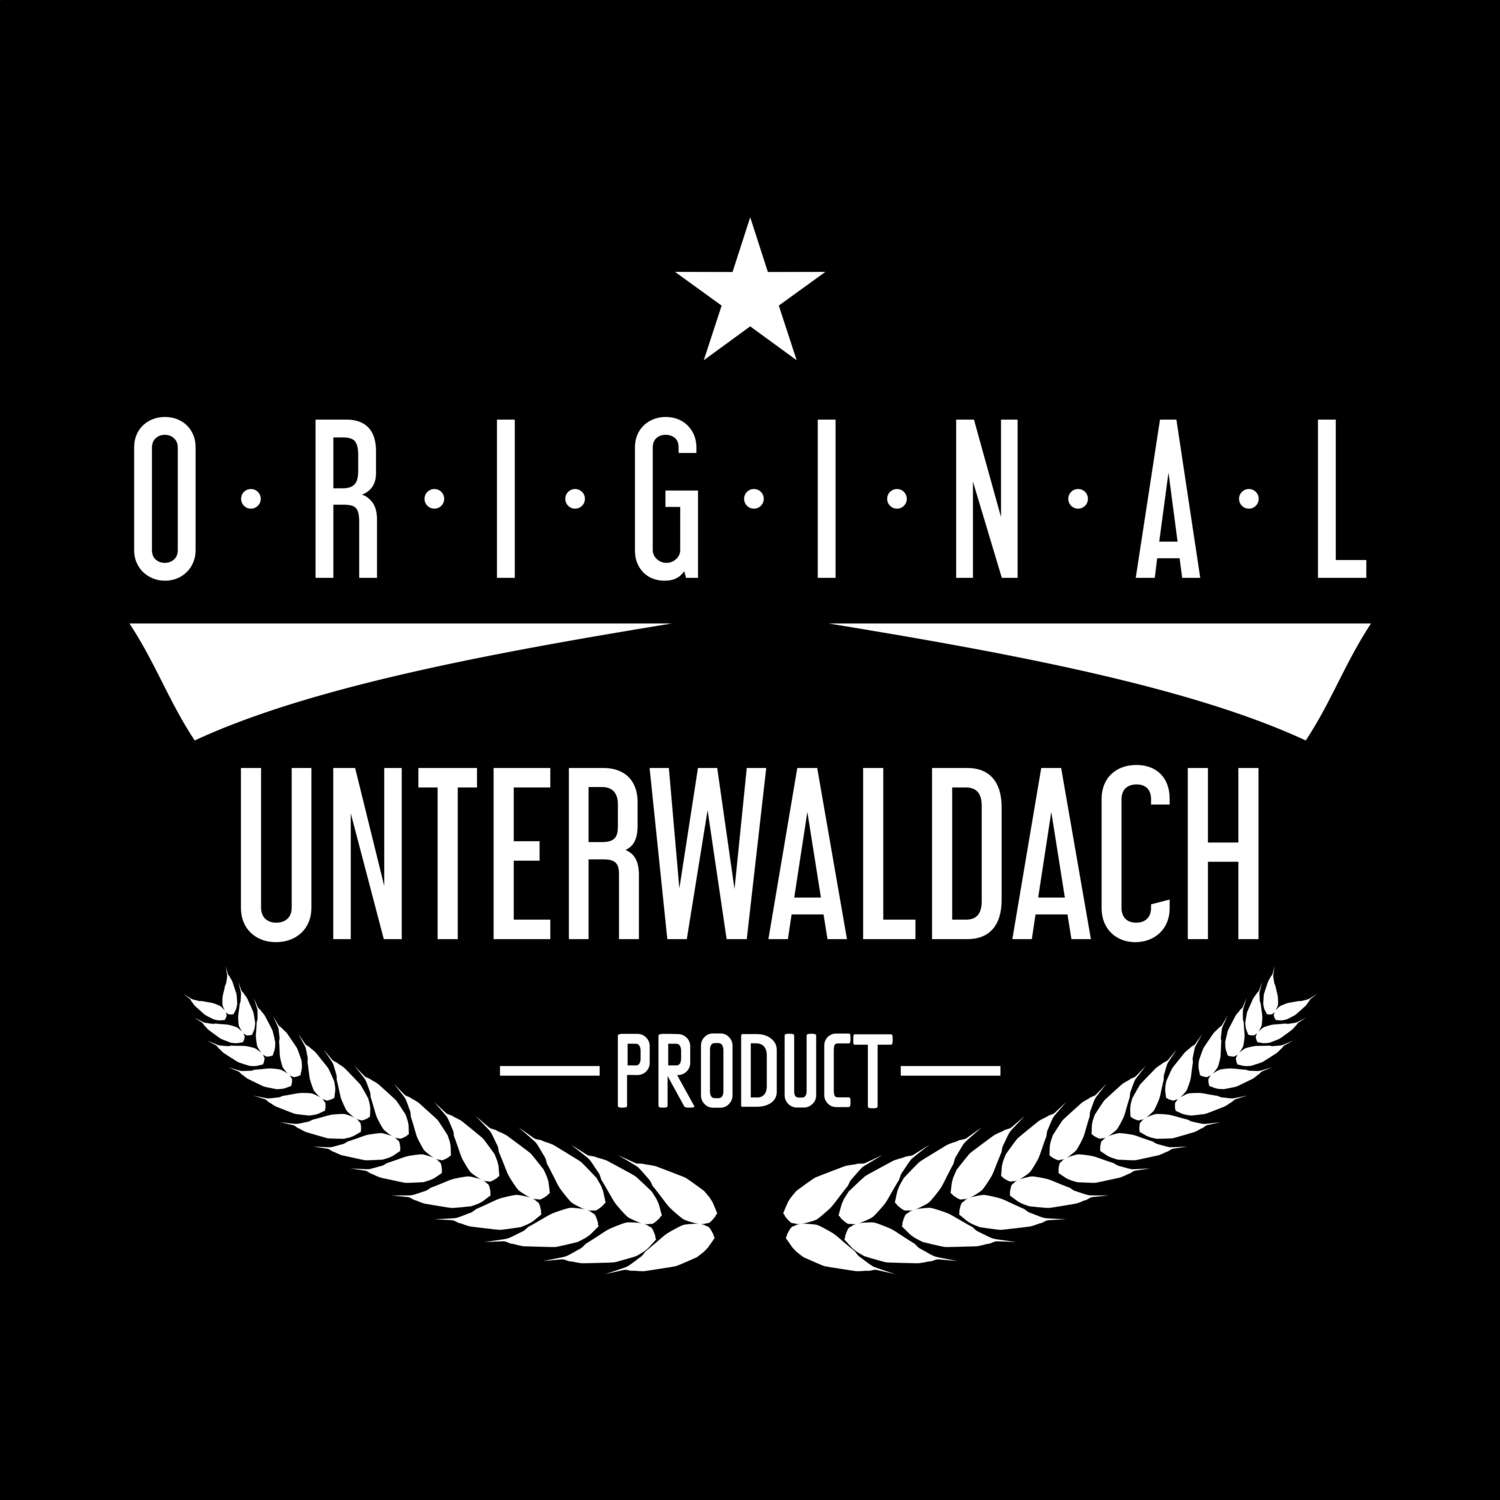 Unterwaldach T-Shirt »Original Product«